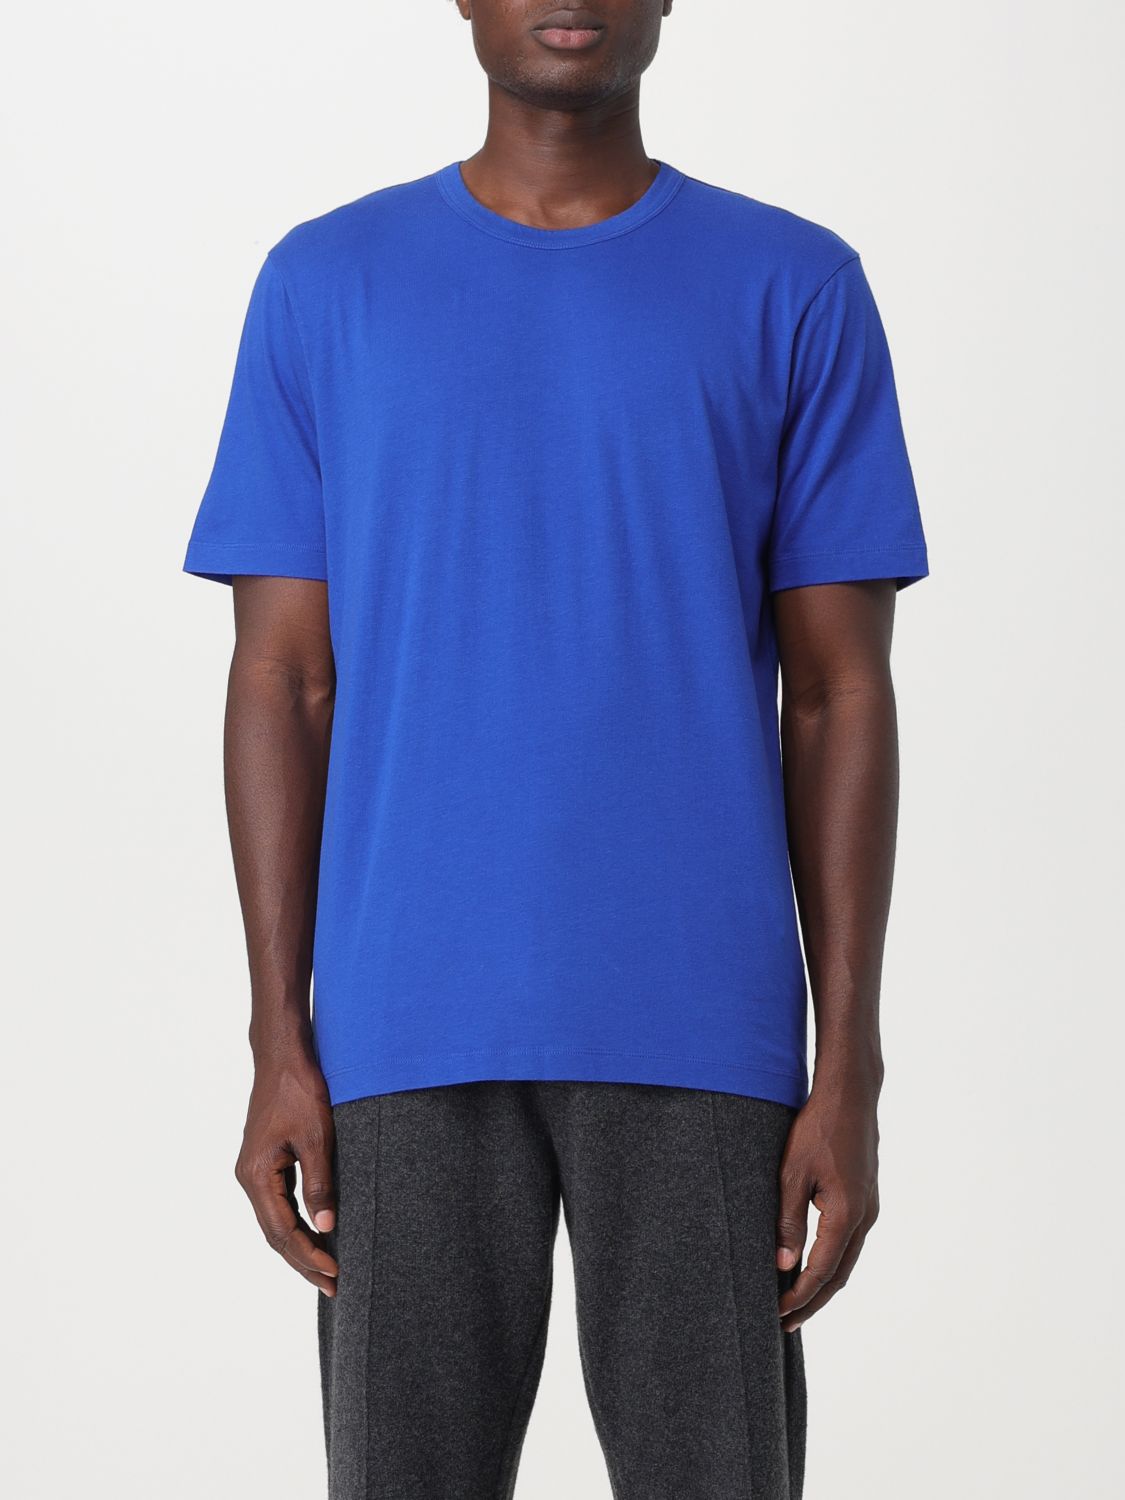 Sunflower T-Shirt SUNFLOWER Men colour Blue